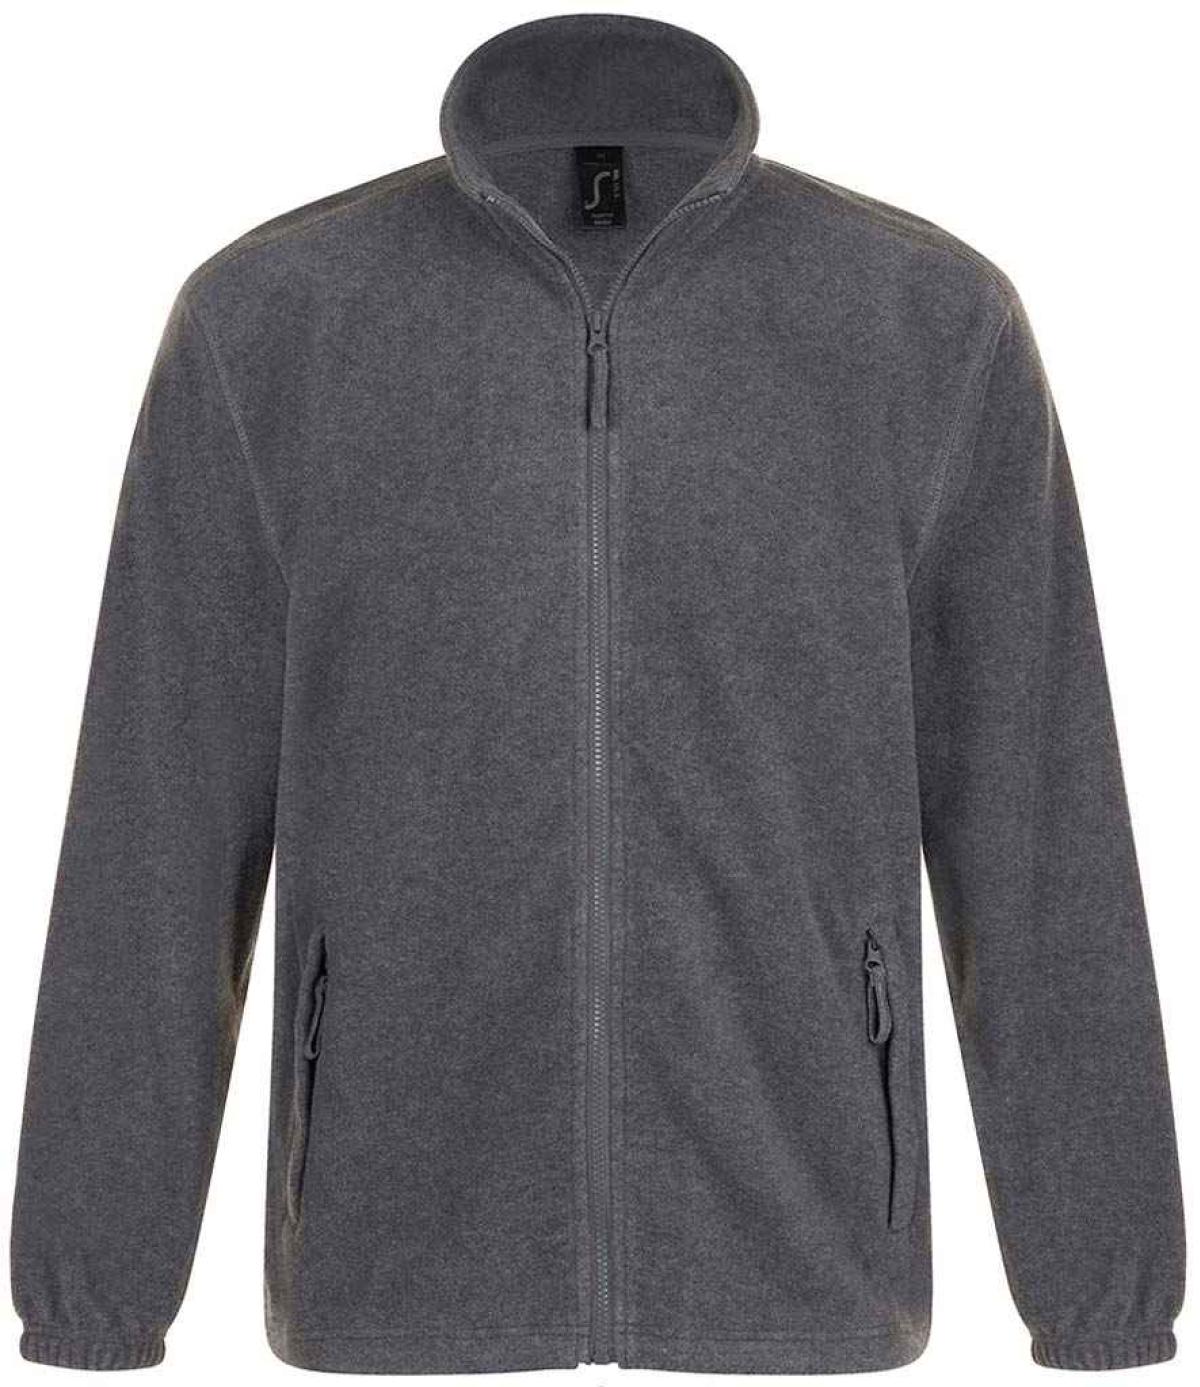 SOL'S North Fleece Jacket - Grey Marl | Order Uniform UK Ltd